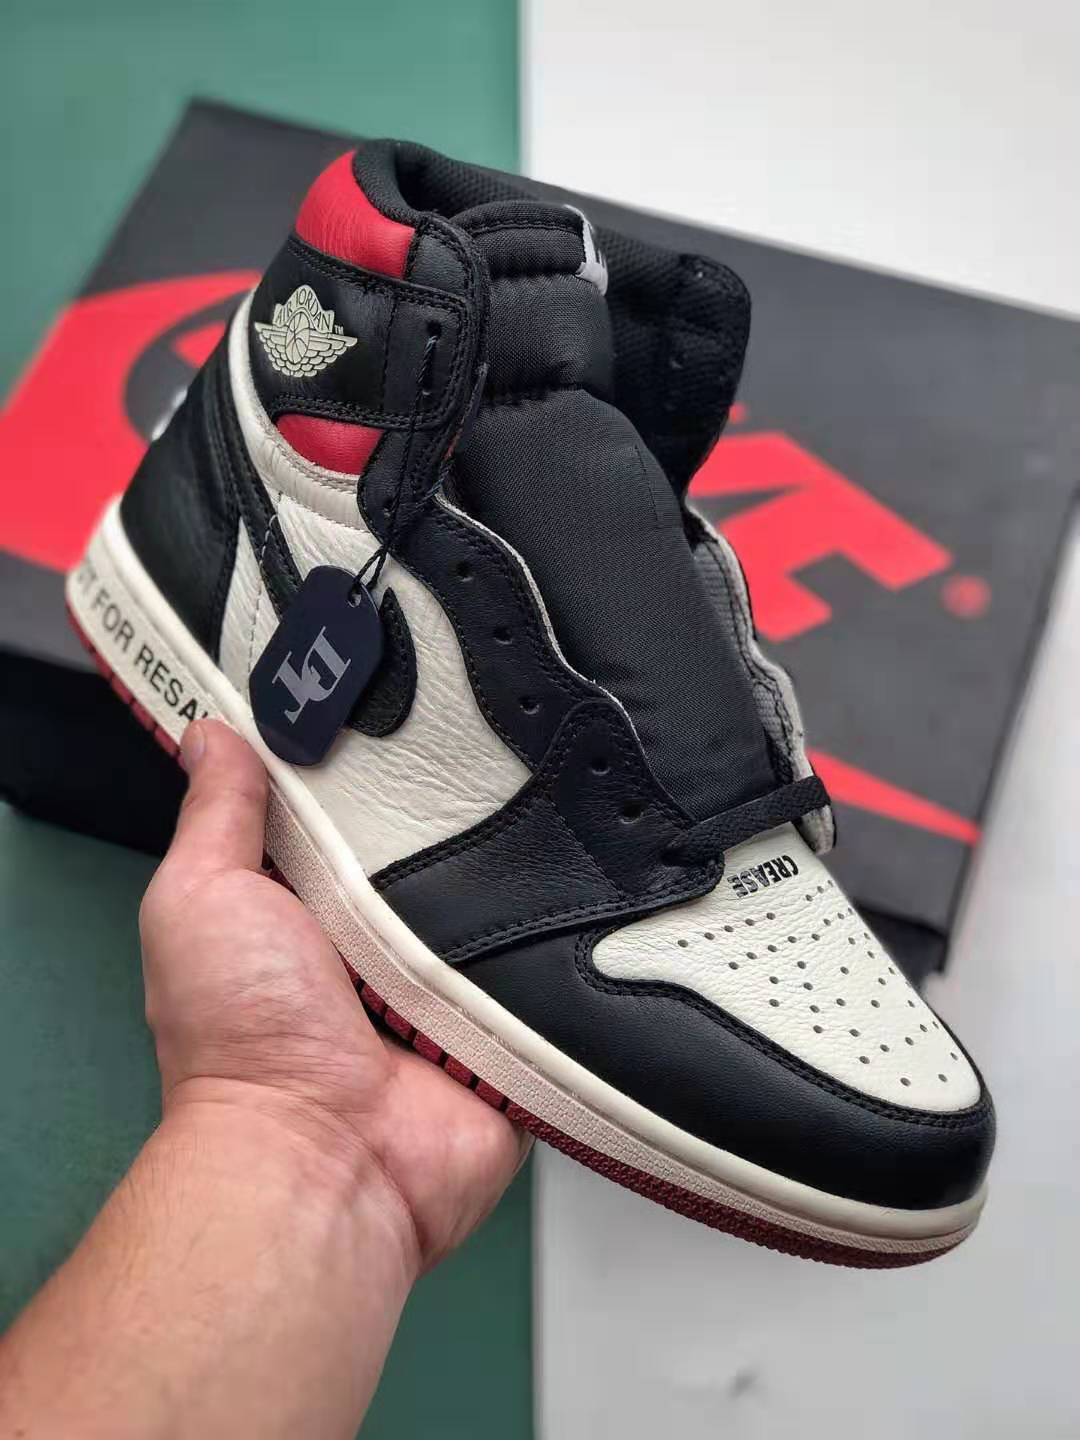 Air Jordan 1 Retro High OG NRG 'Not For Resale' 861428-106: Limited Edition Sneakers